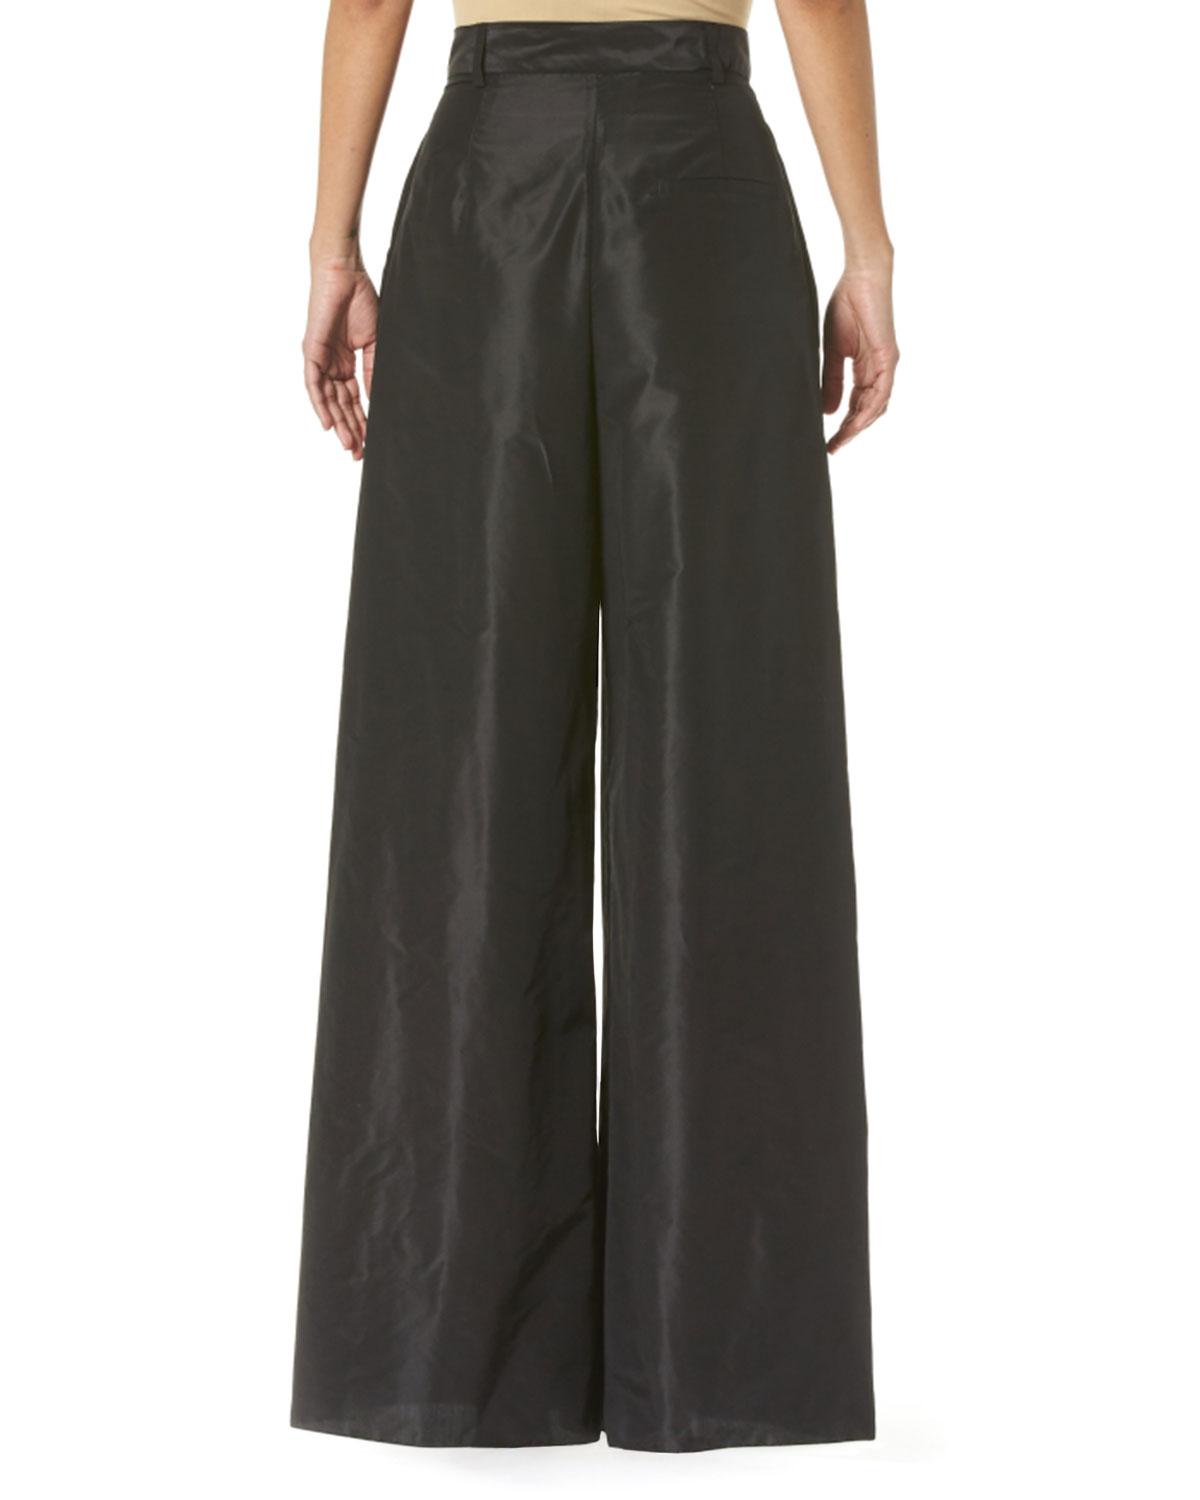 Carolina Herrera Silk Taffeta High-waist Wide-leg Pants in Black - Lyst